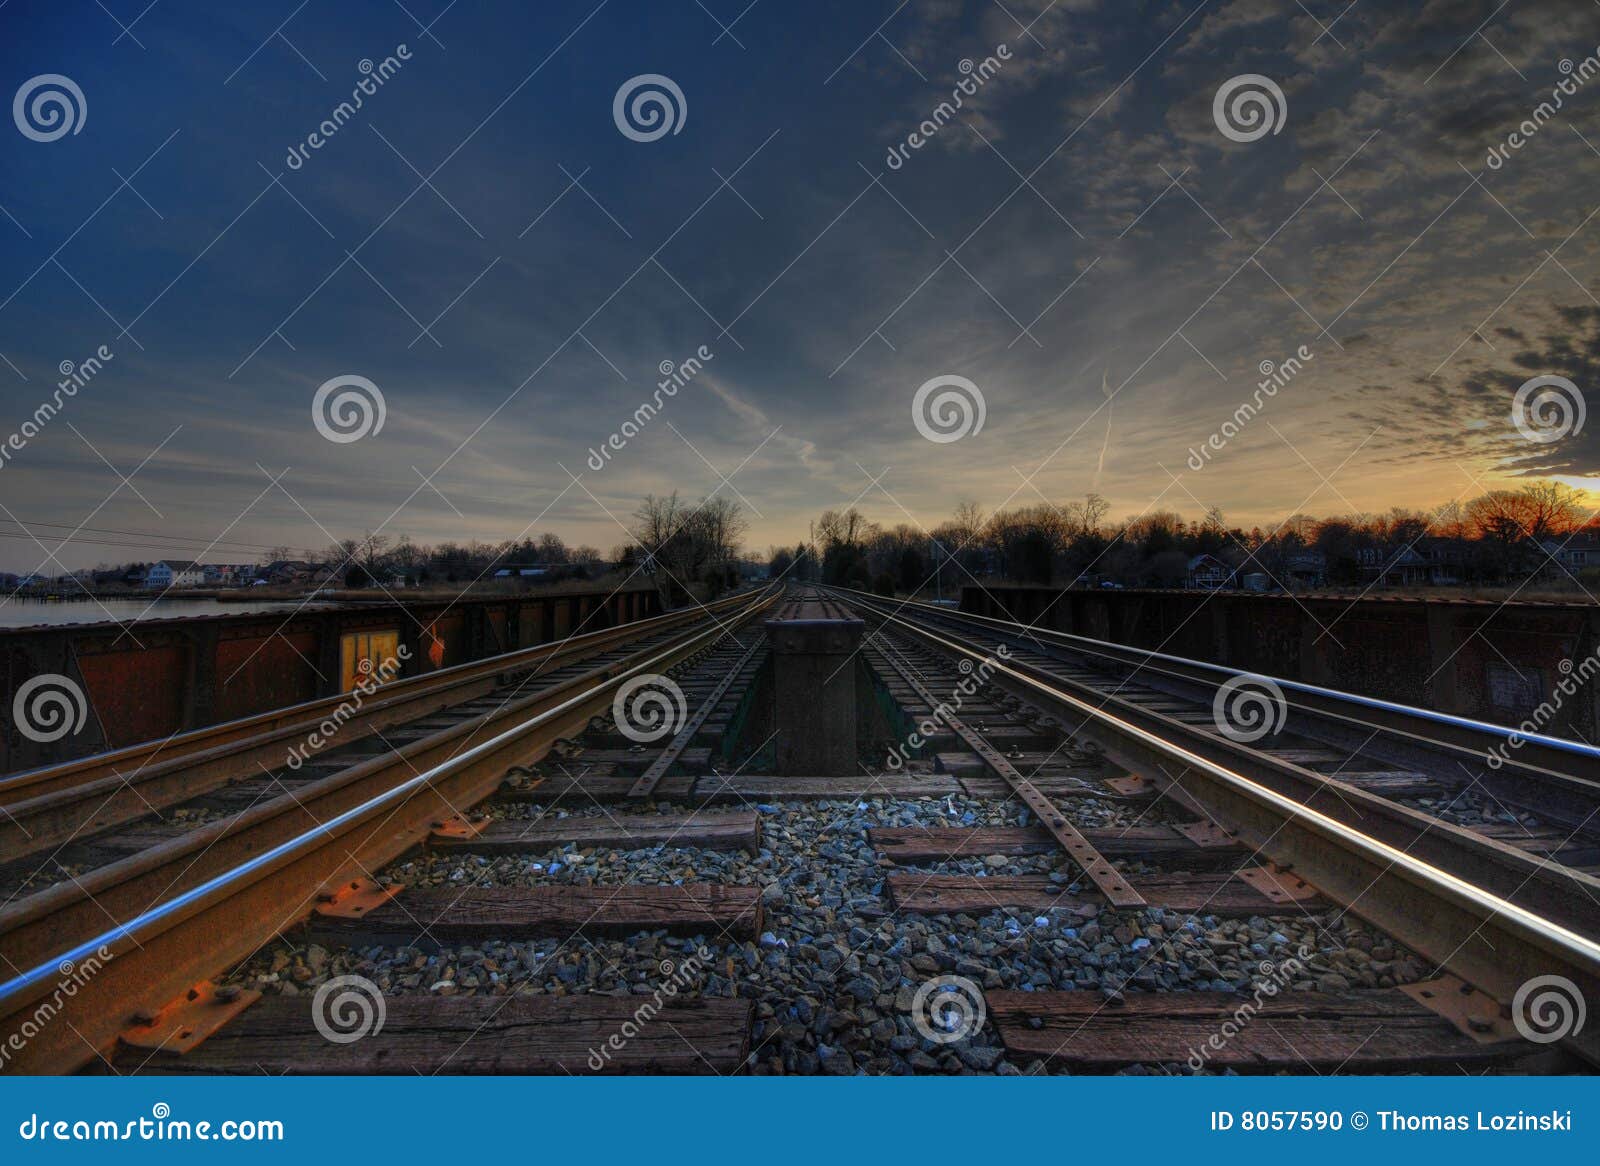 train tracks hdr